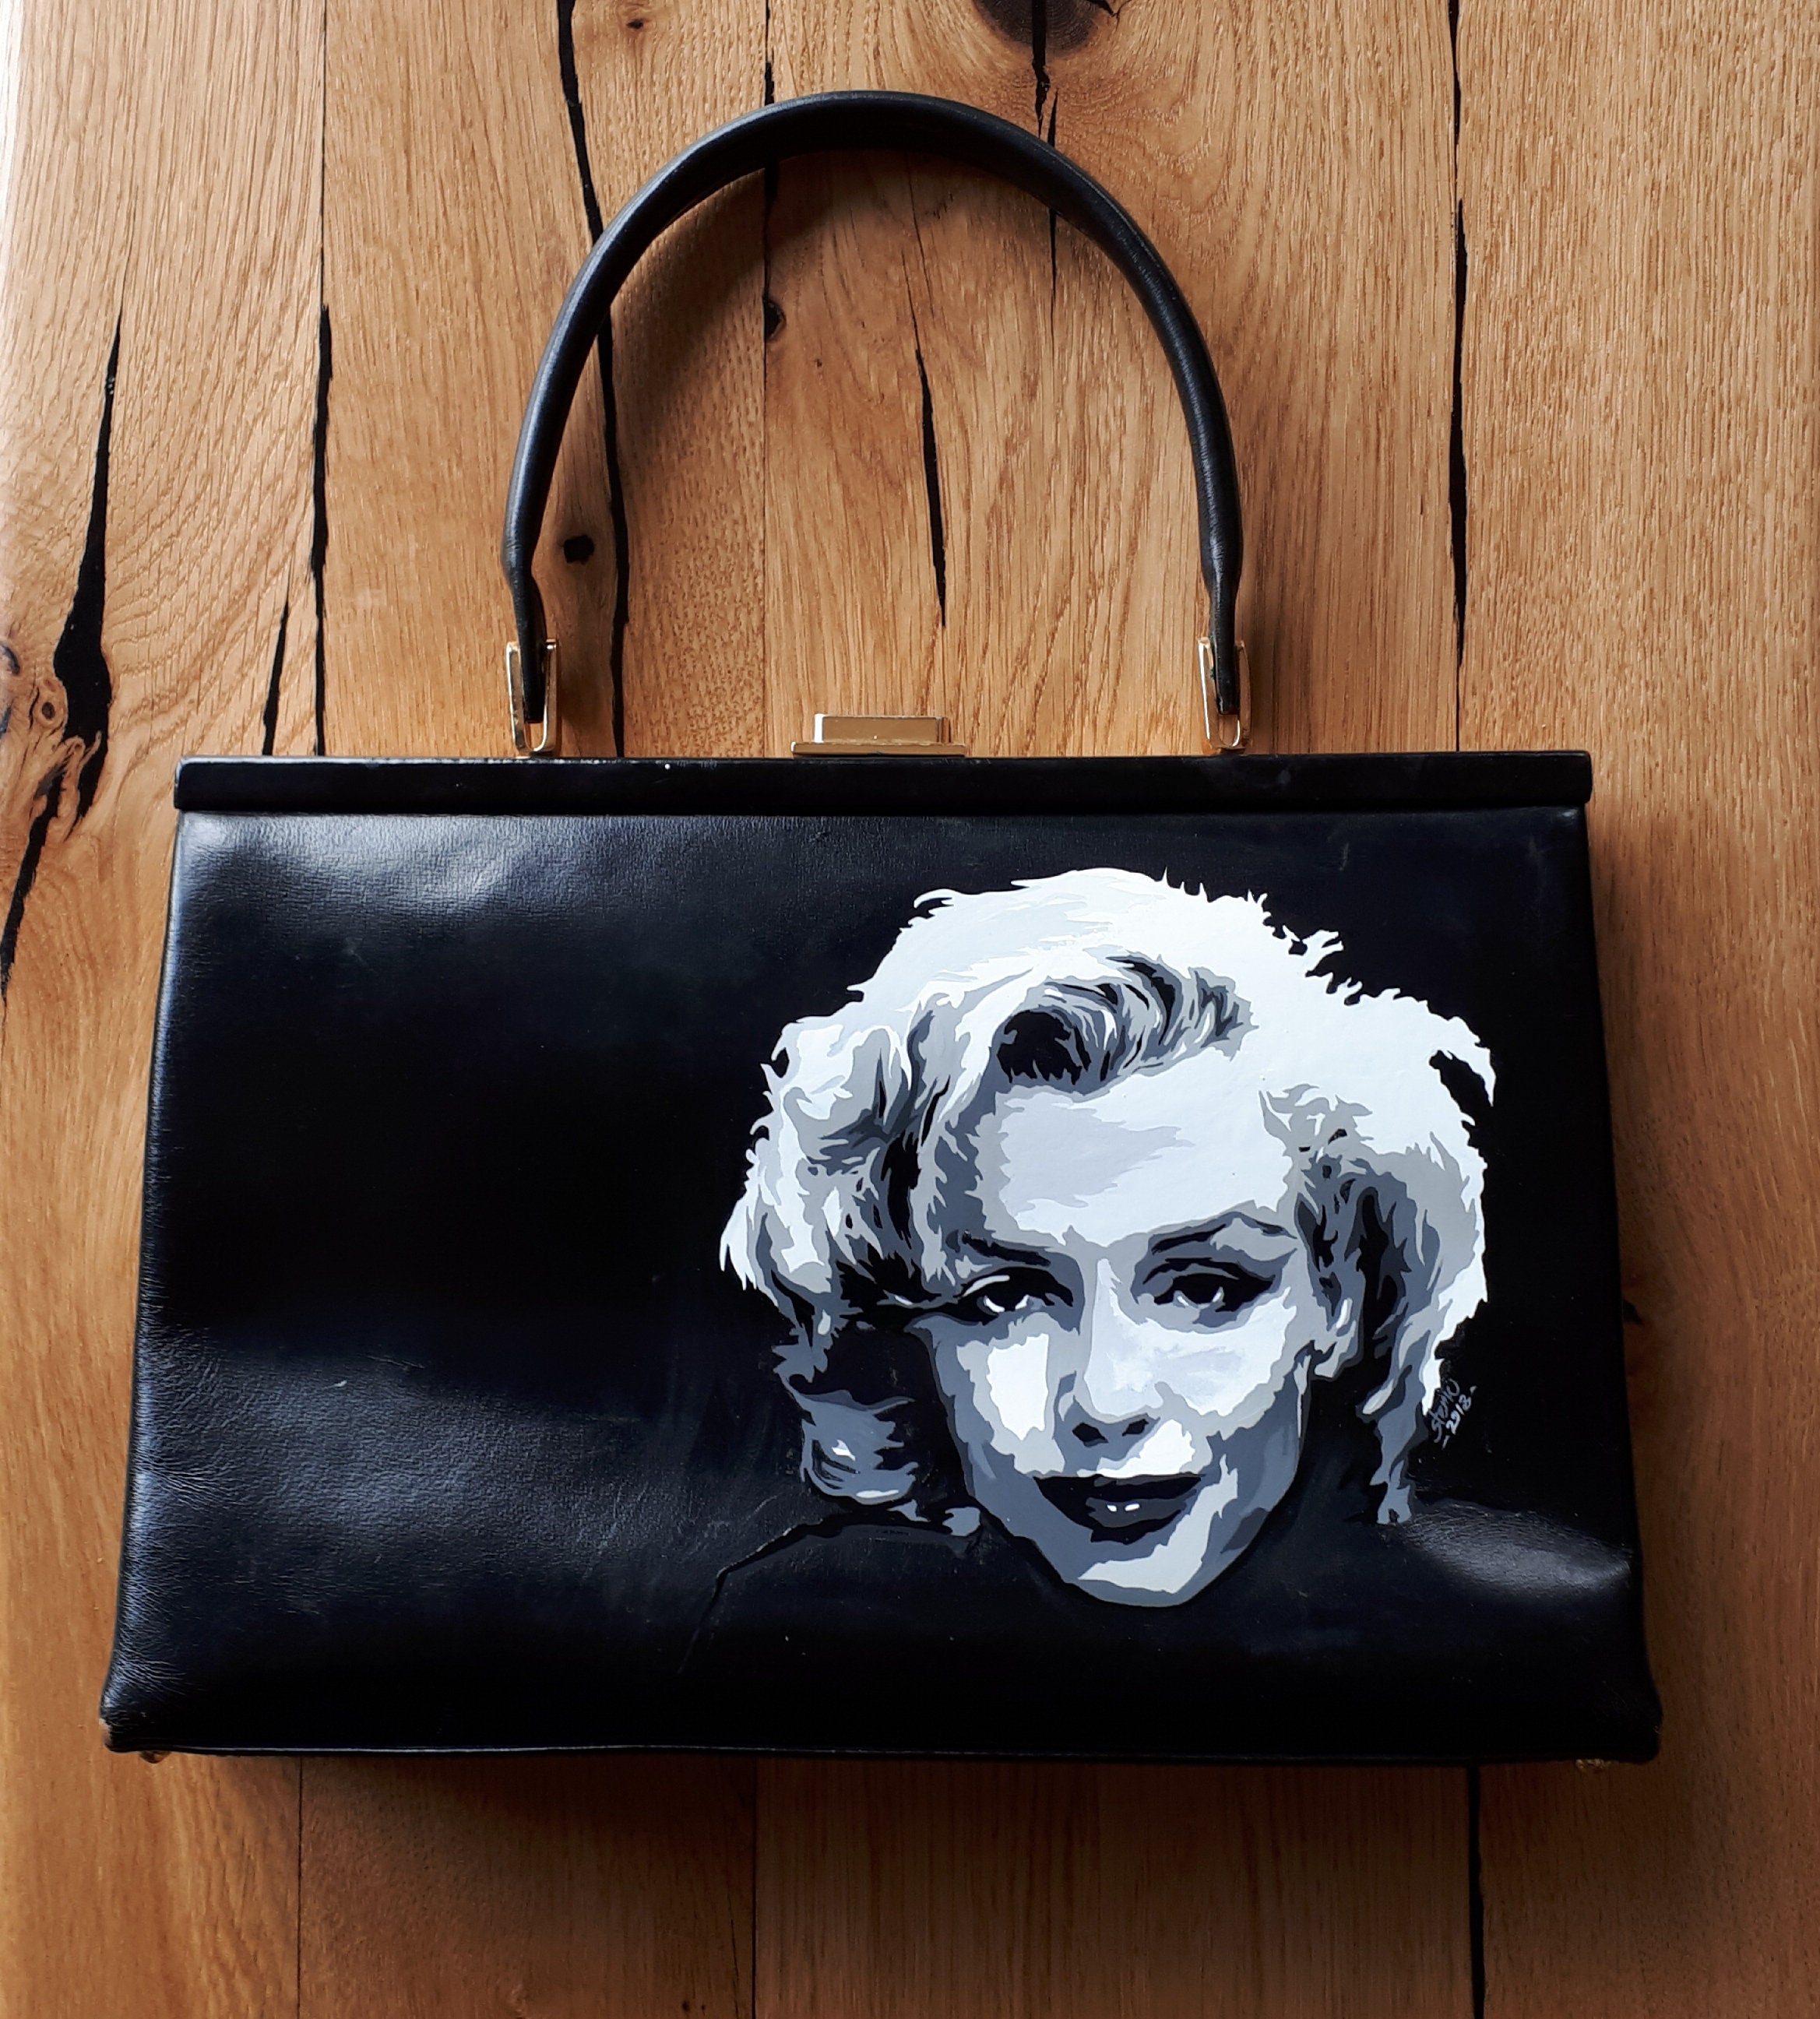 NWT! Marilyn Monroe Handbag Purse Set Of 3 Beige Black Trim Red Lining  CUTE! NWT